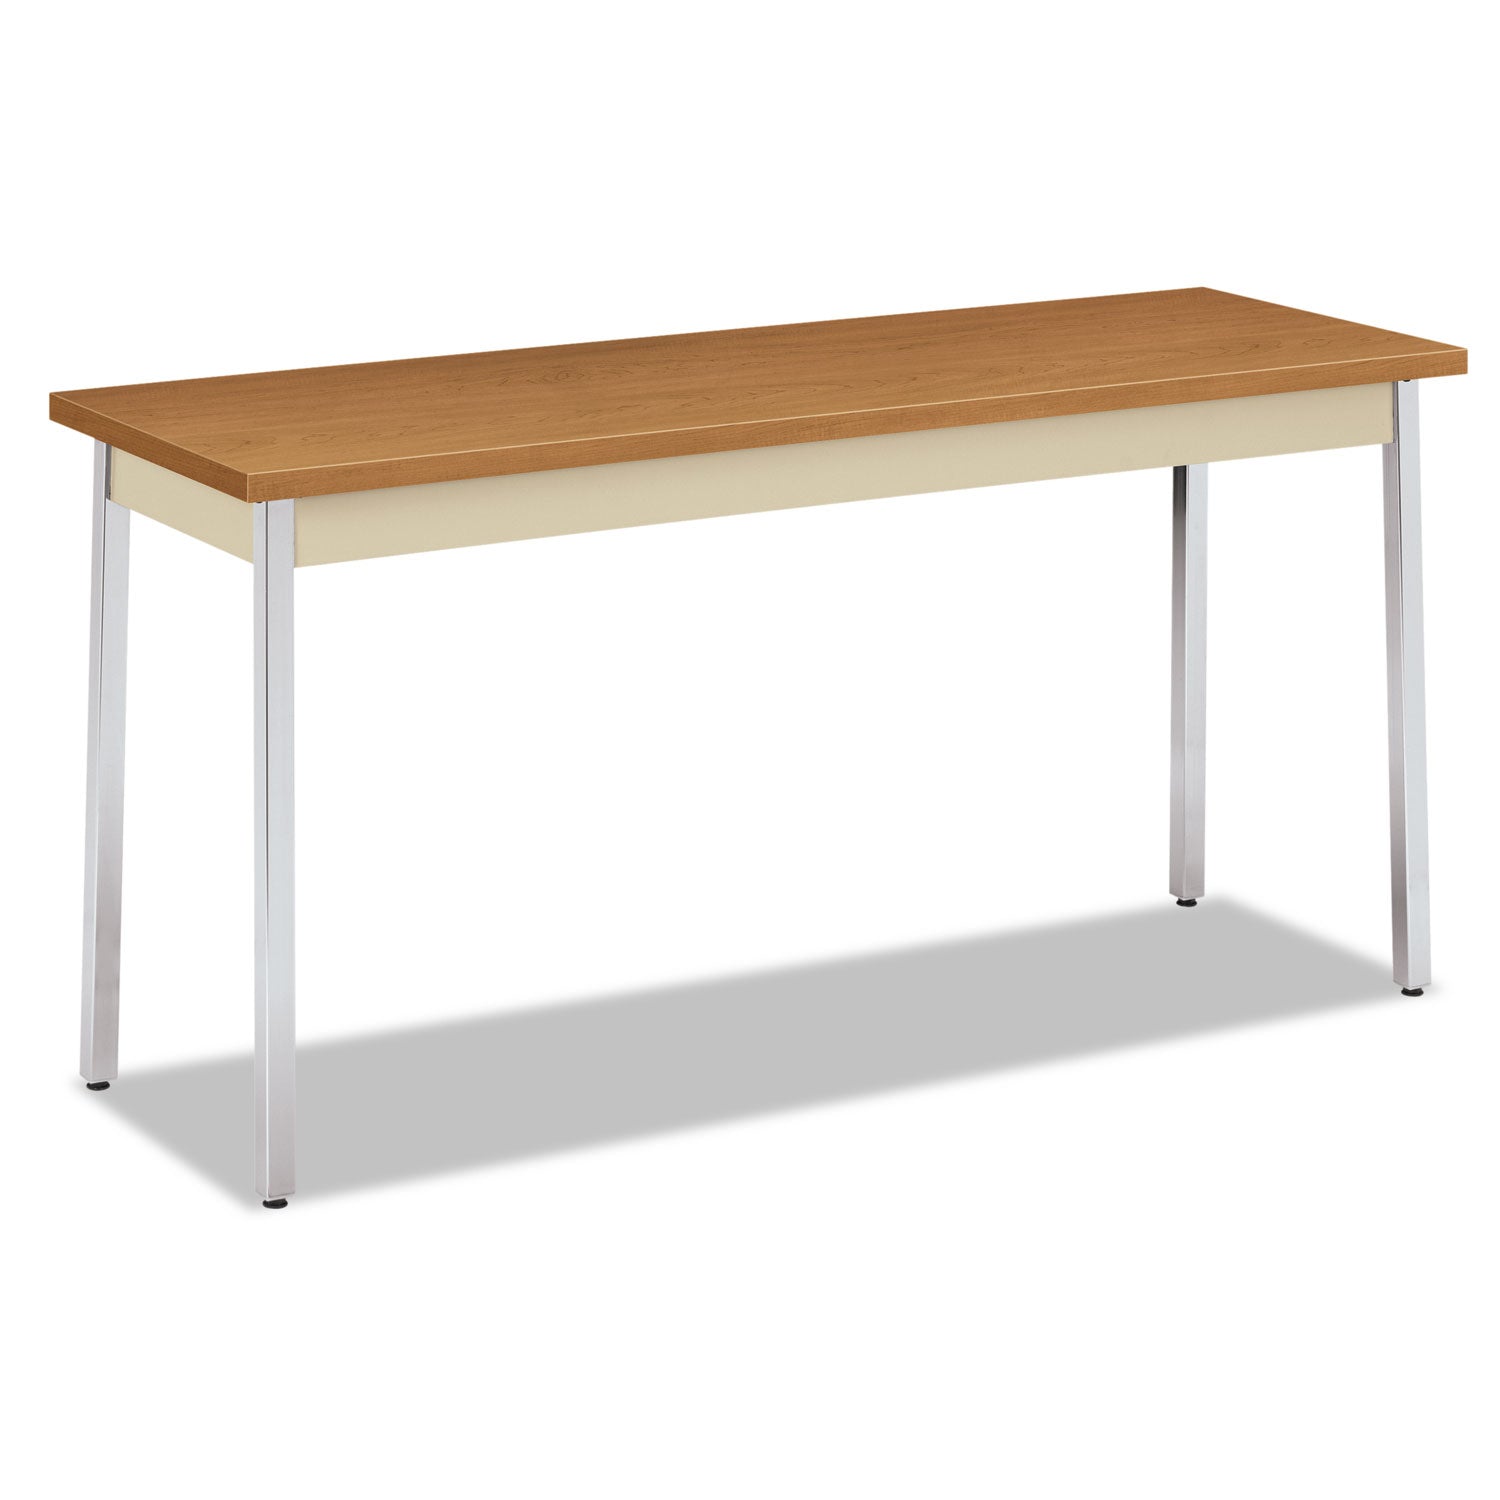 Utility Table, Rectangular, 60w x 20d x 29h, Harvest/Putty - 